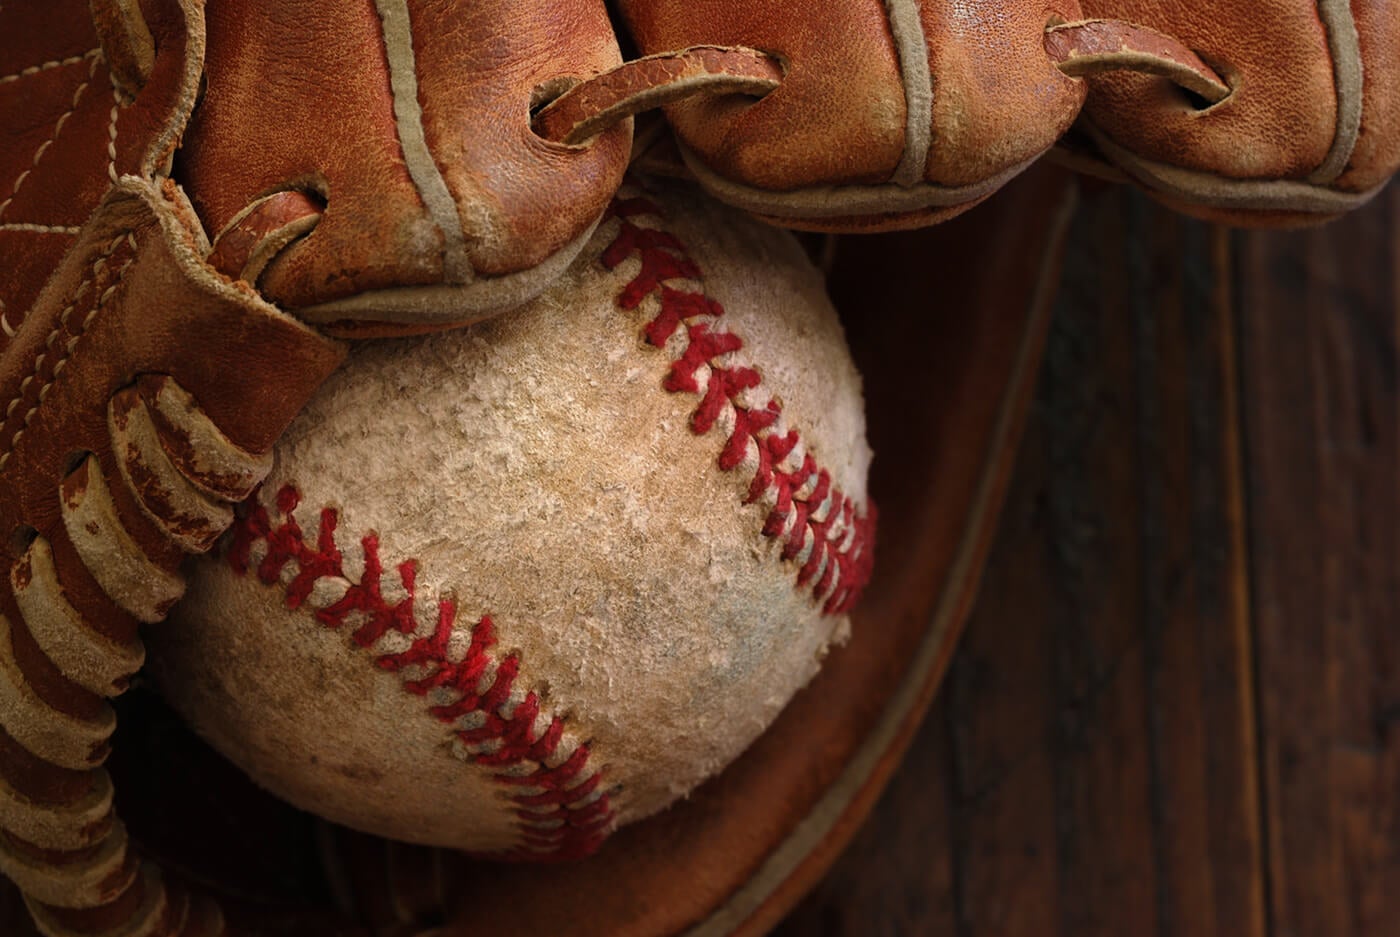 glove and baseball as fine art photo prints